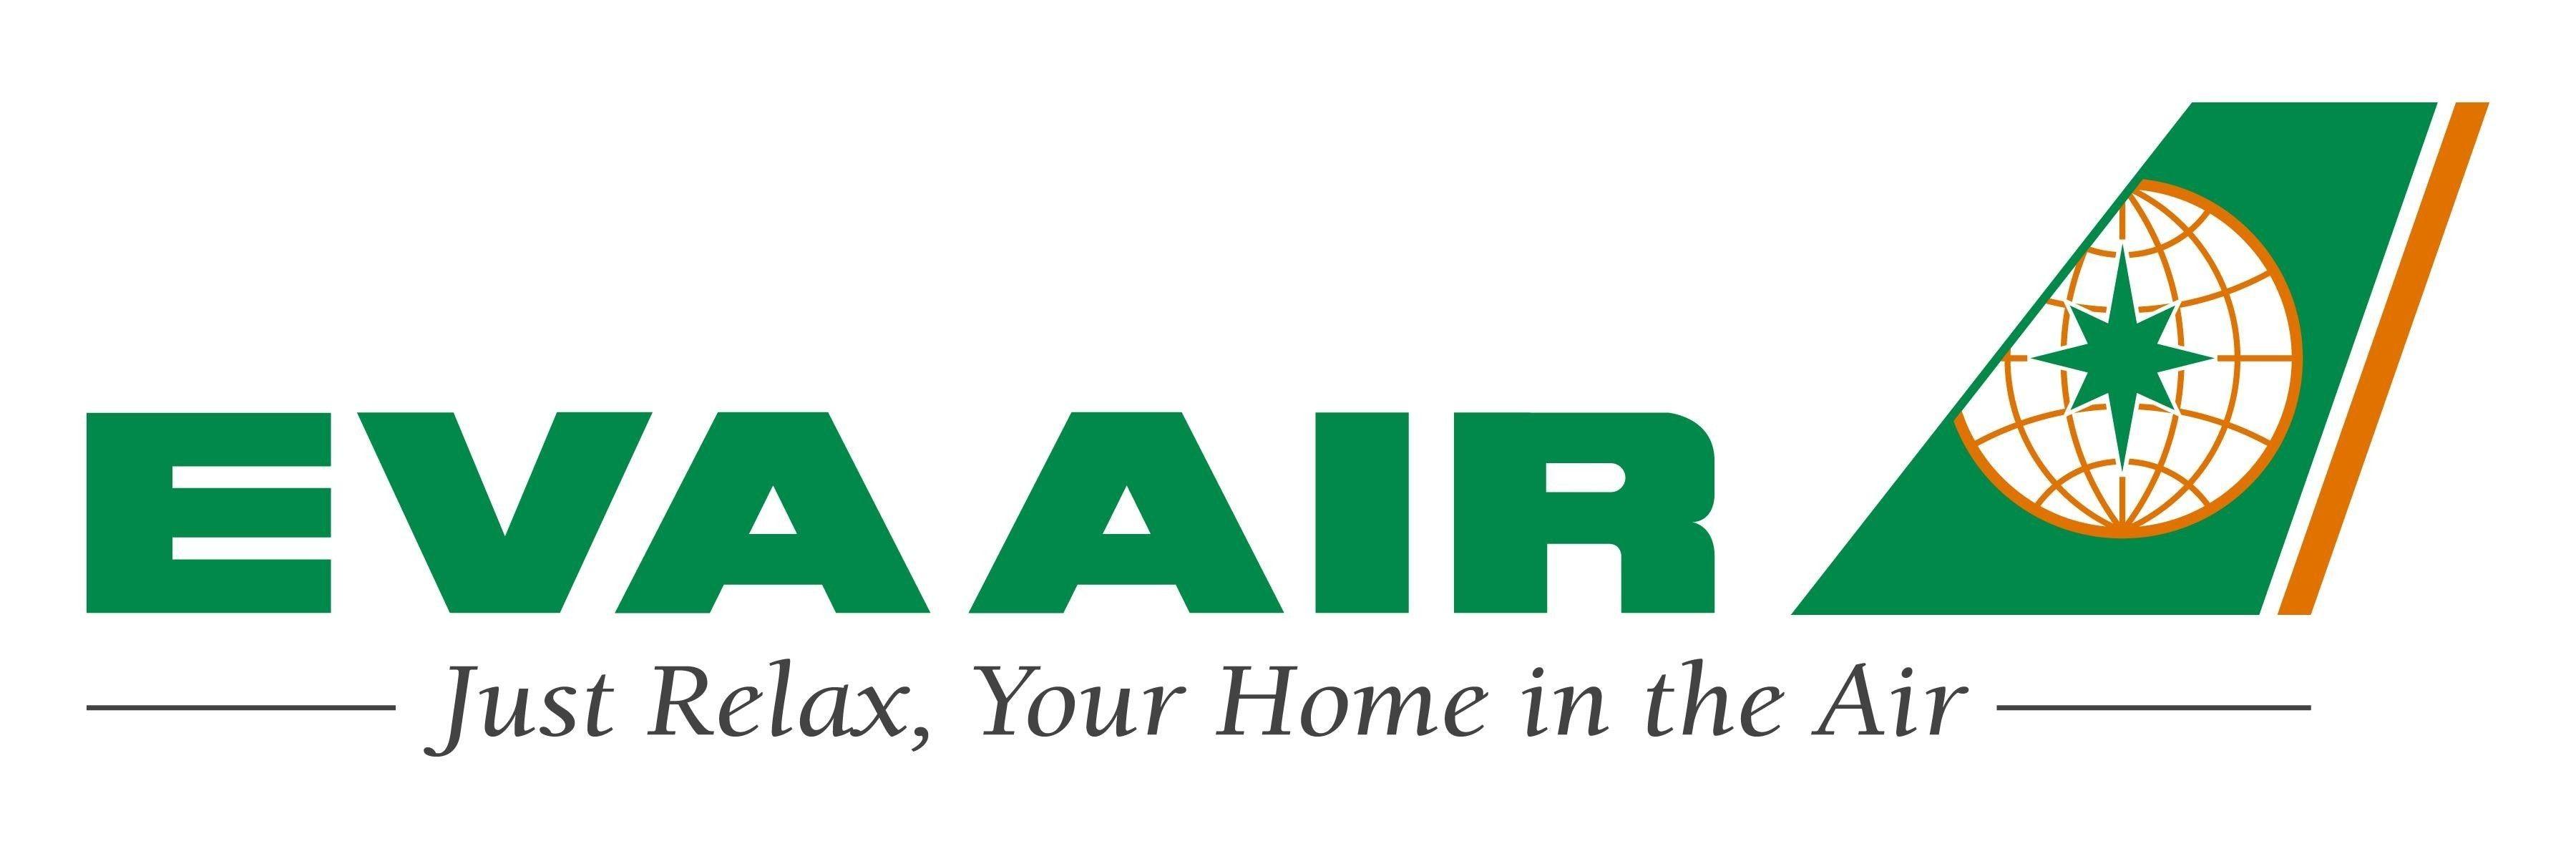 Green Air Logo - Eva-Airways logo